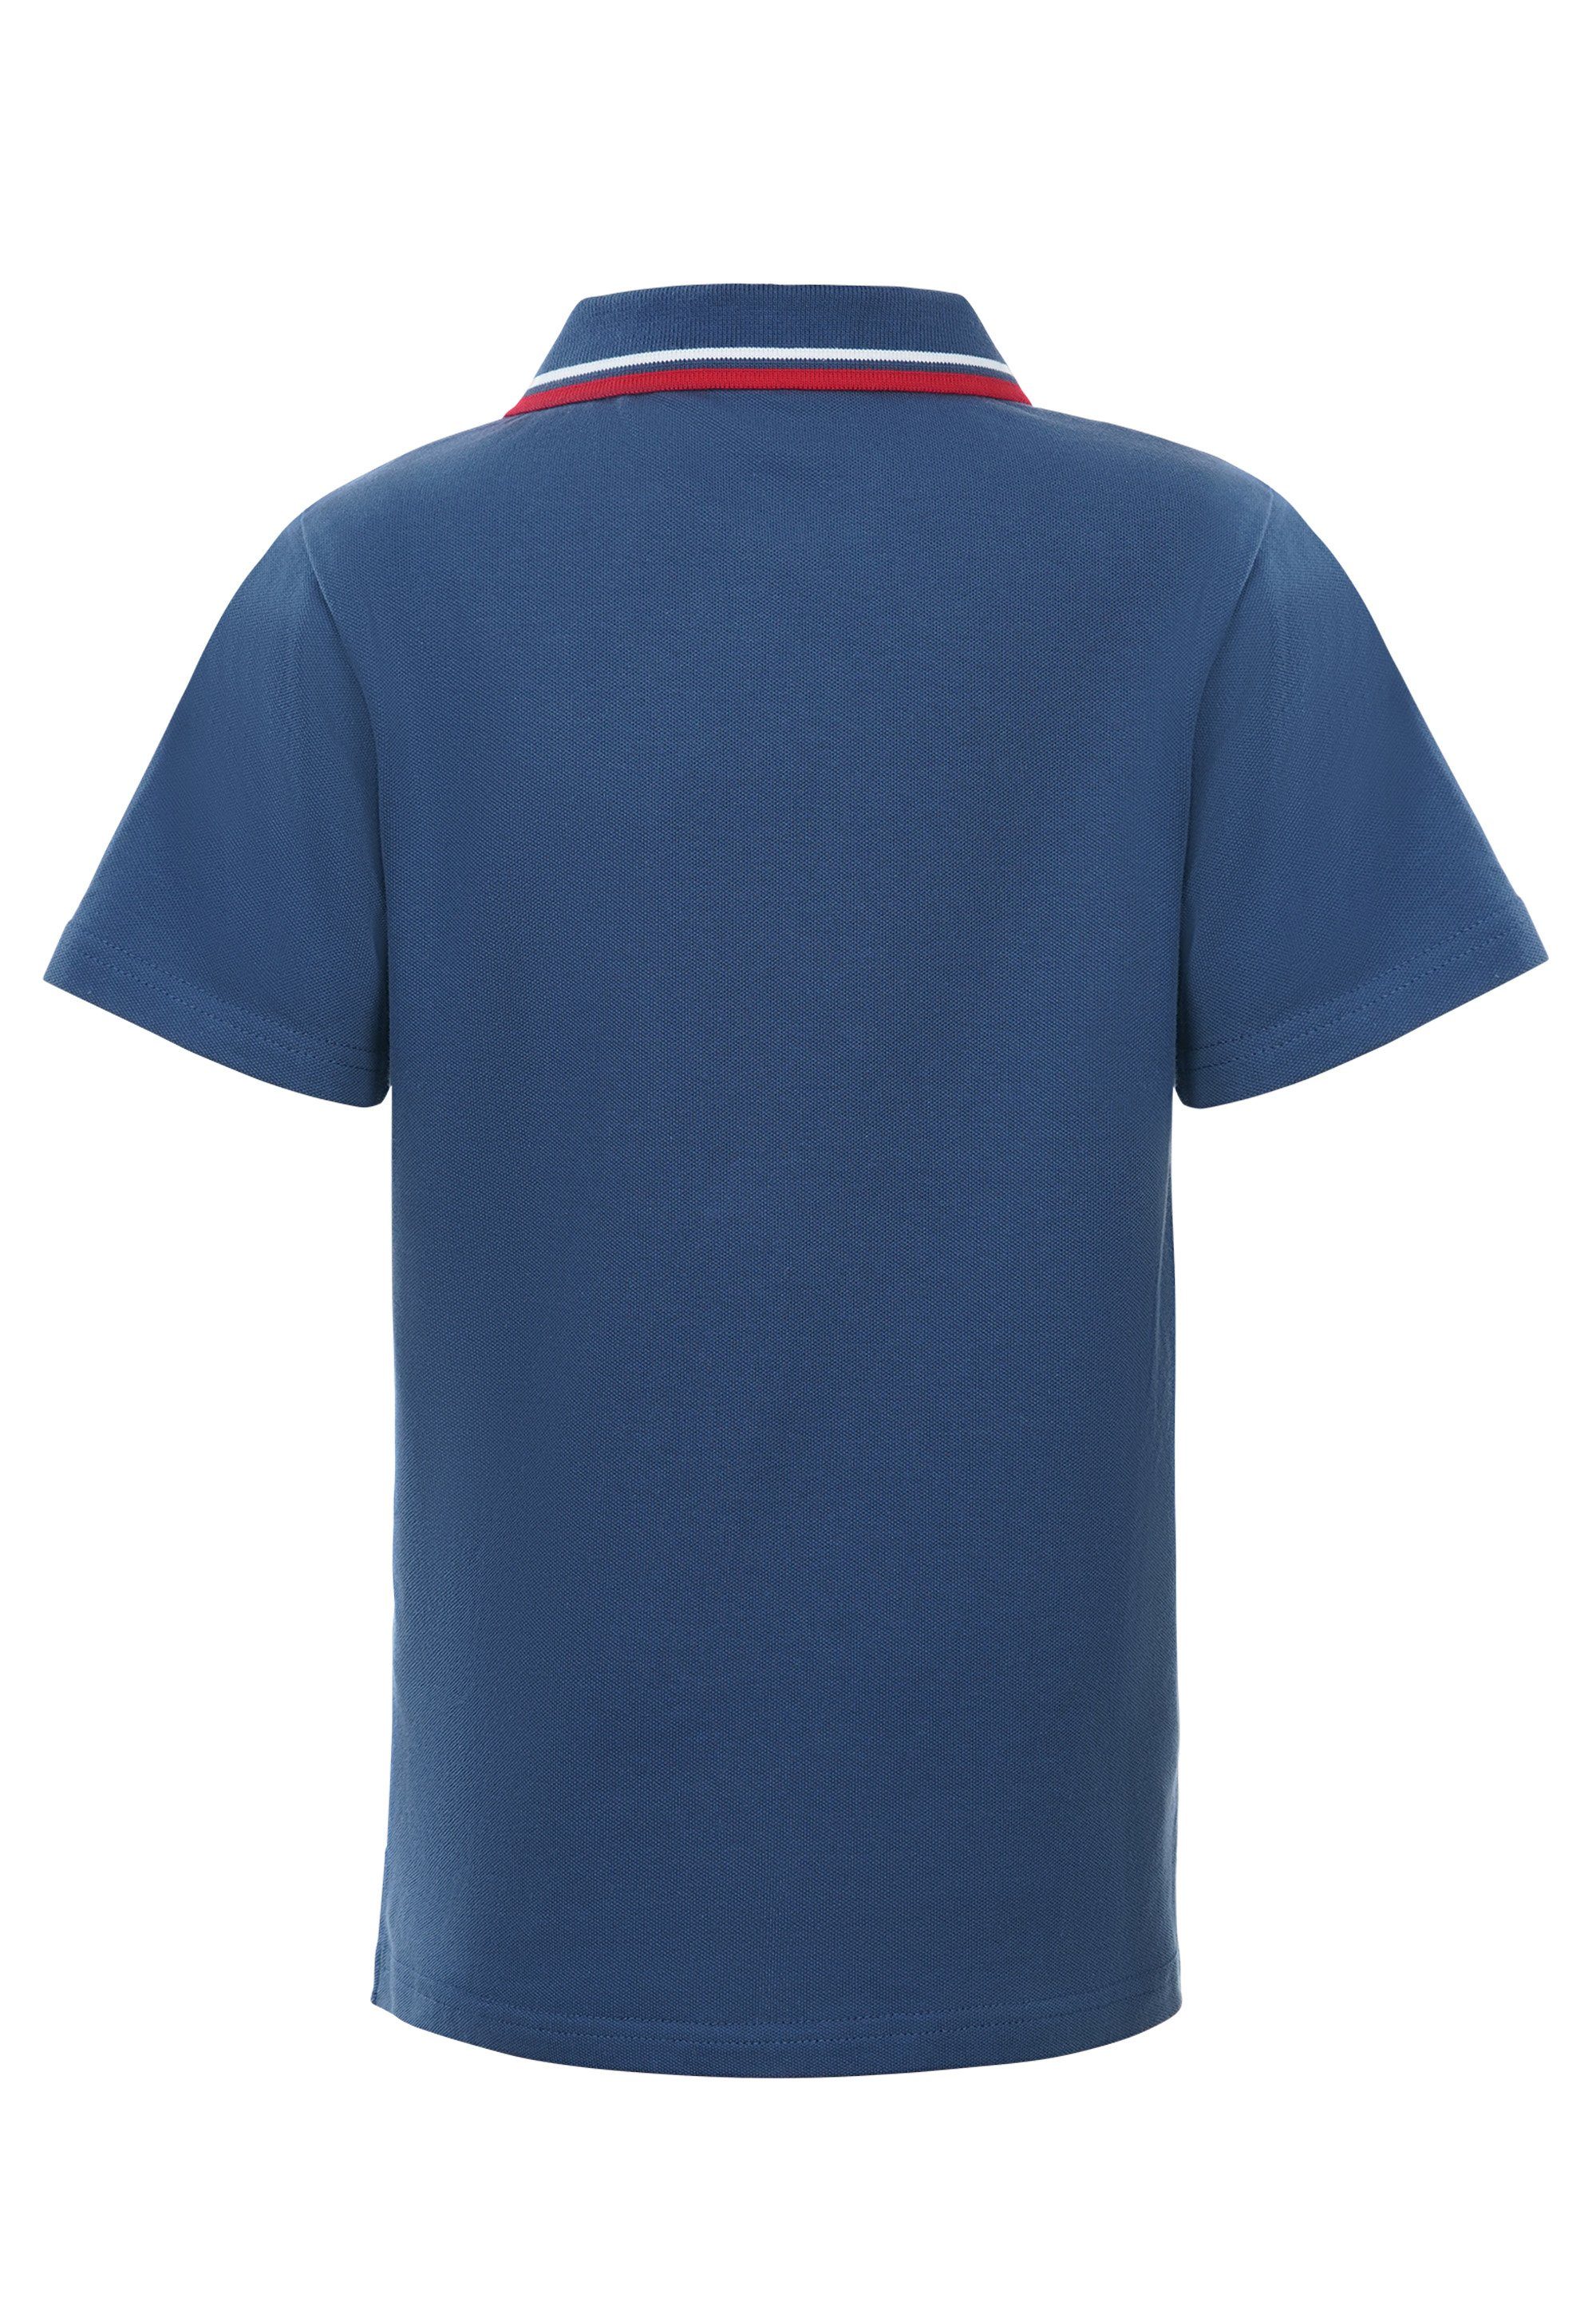 GIORDANO Comic Poloshirt Retro blau-meliert junior mit Löwen-Stickerei Style toller